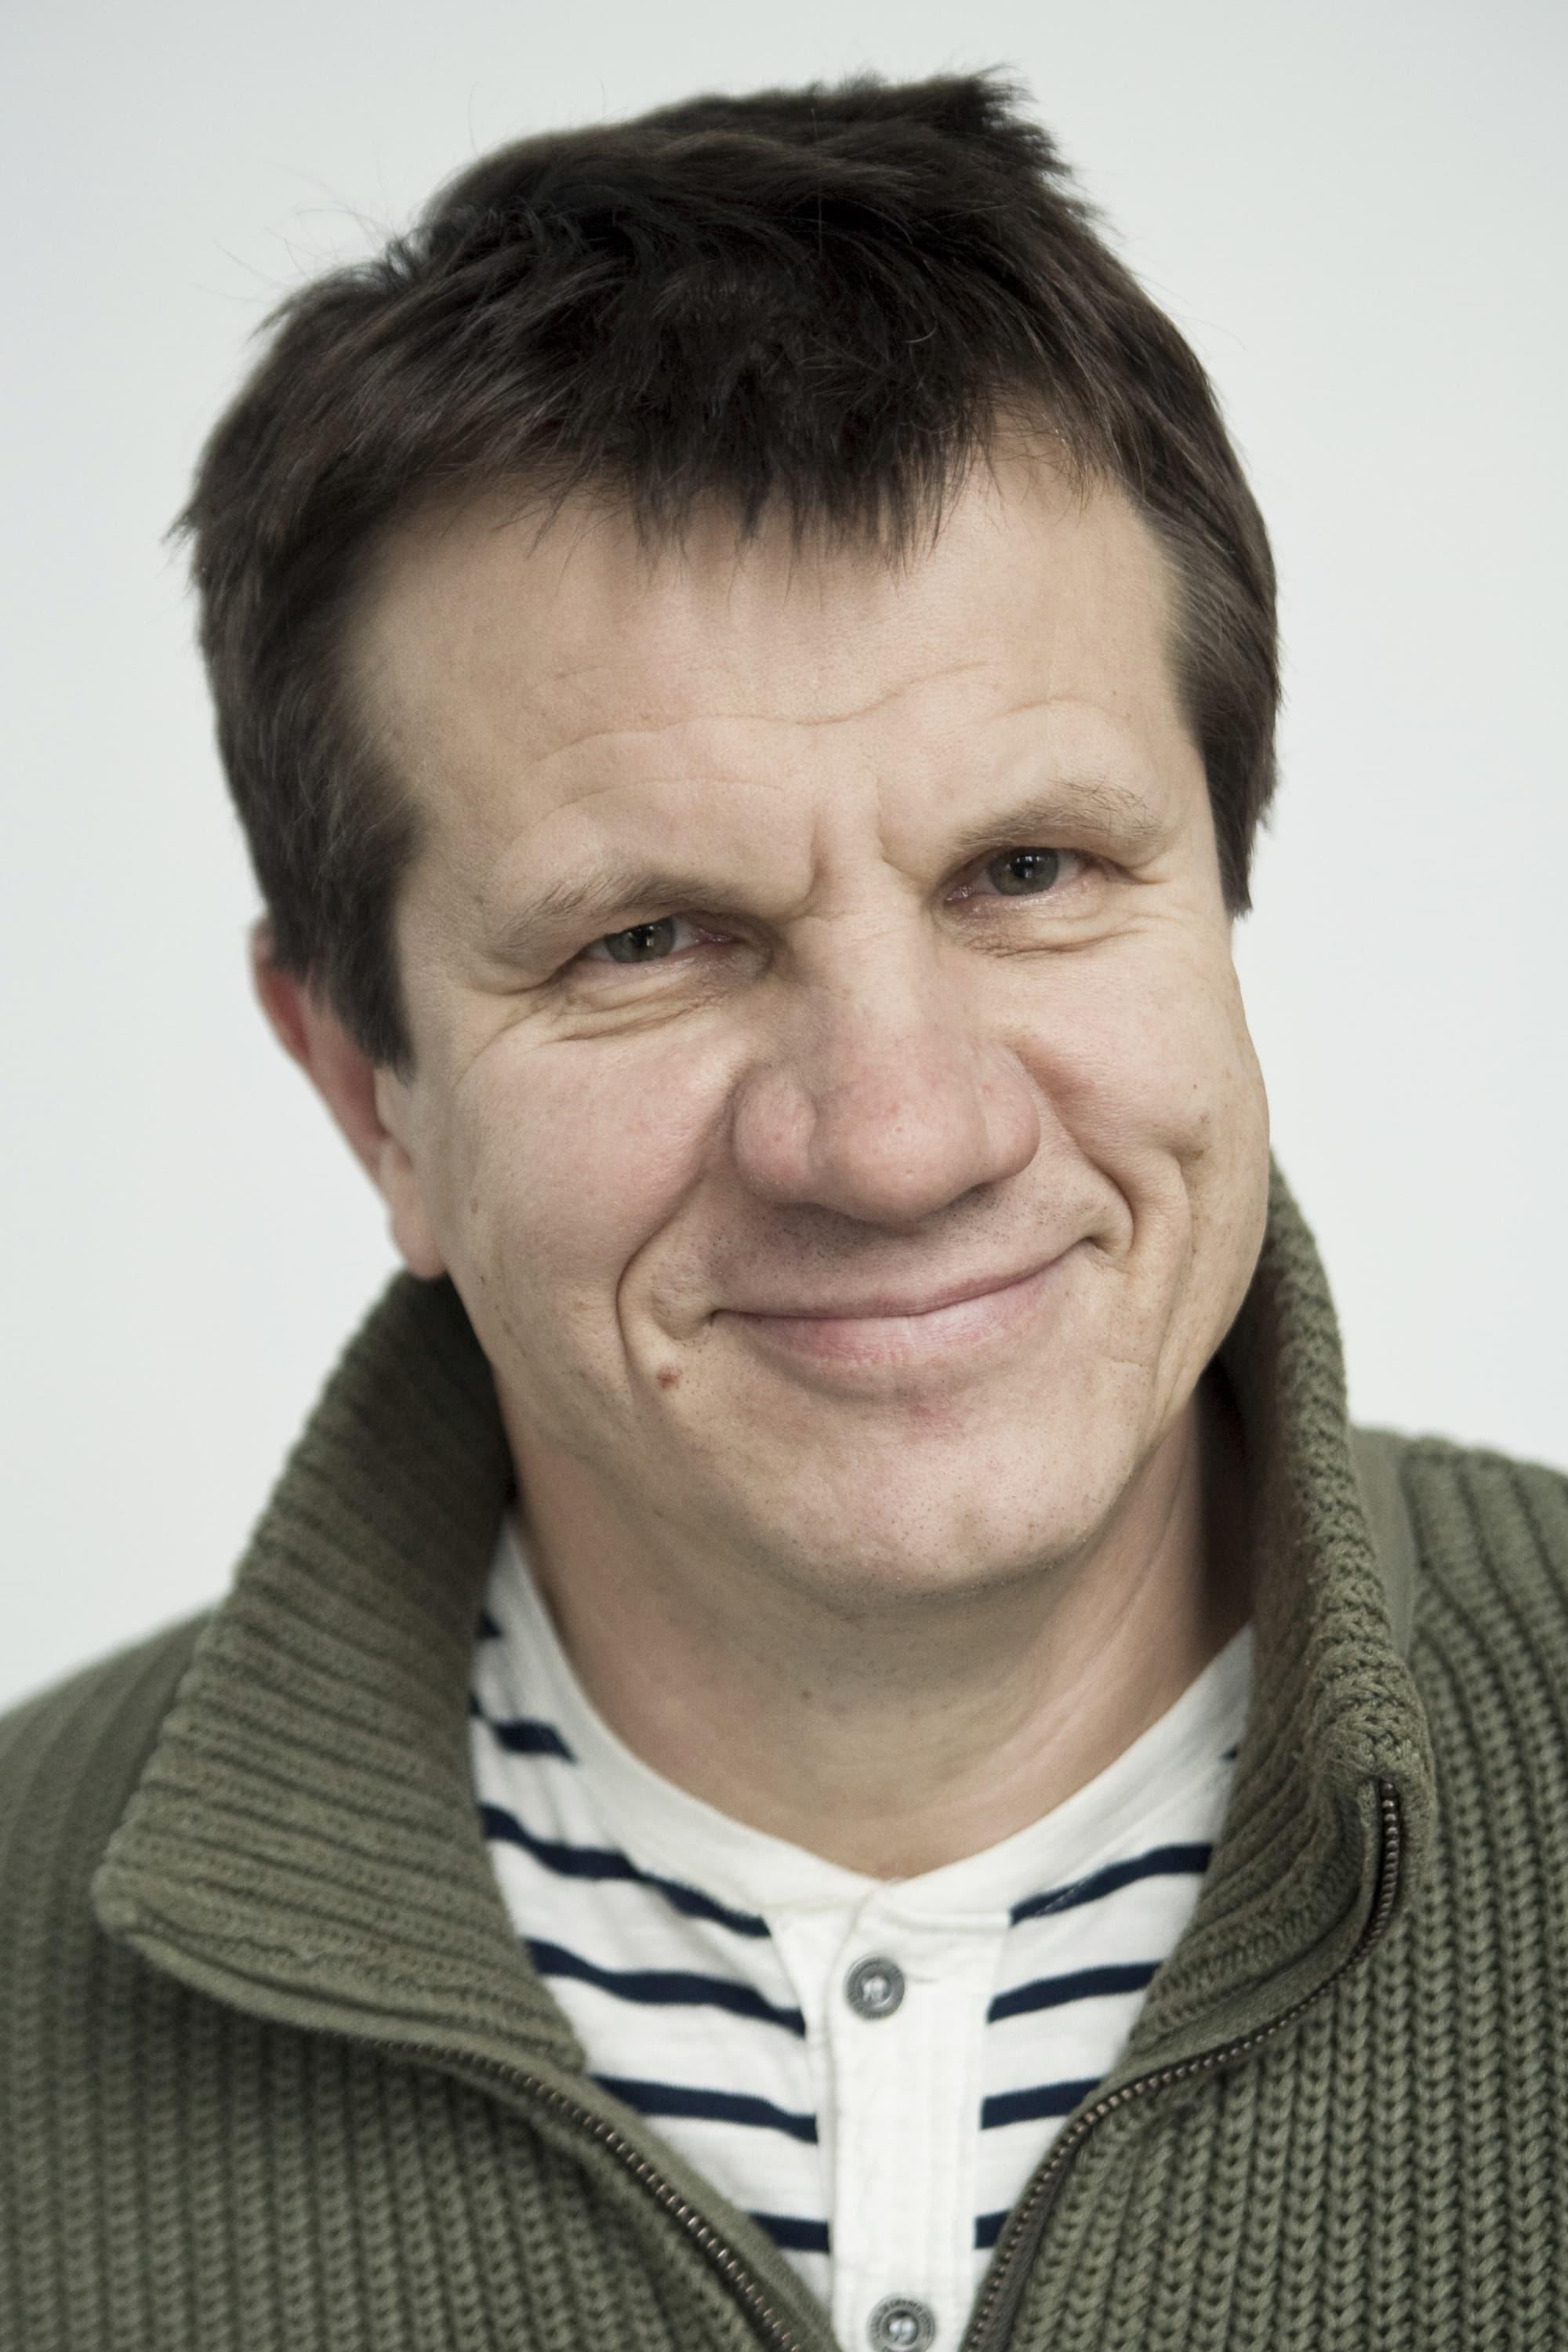 Hannes Kaljujärv | Unknown Actor